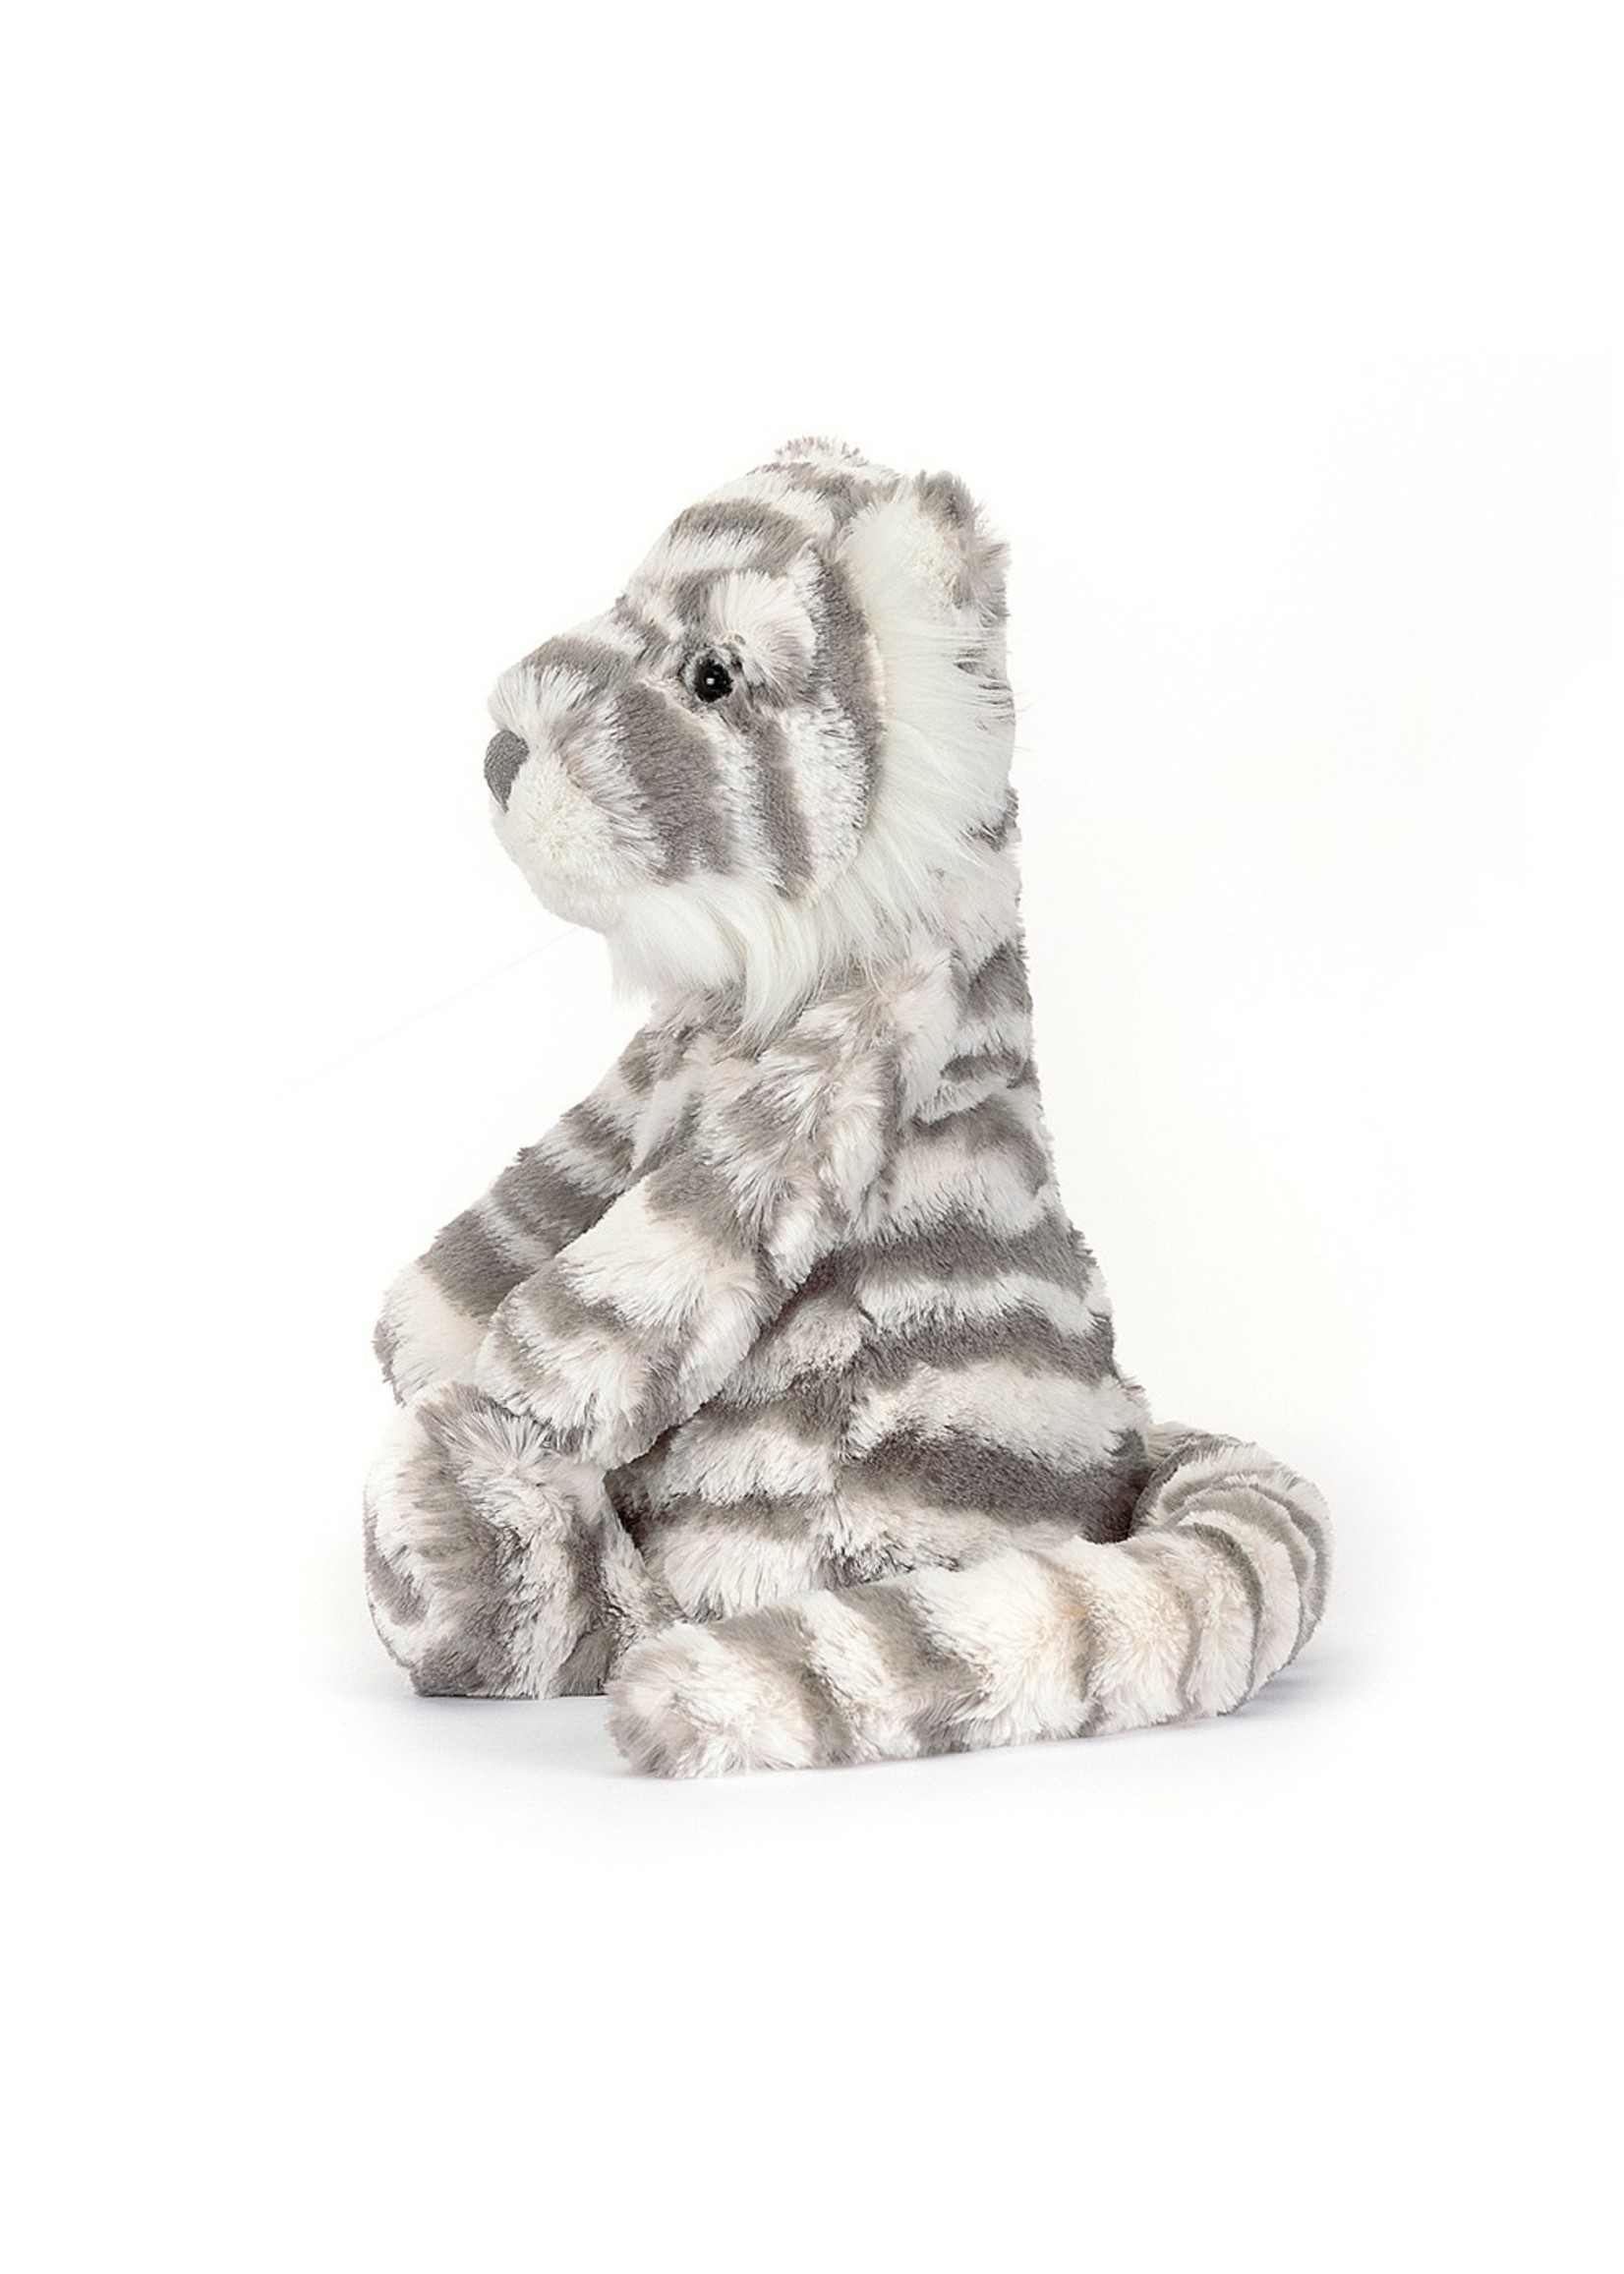 Jellycat Bashful Snow Tiger - Medium